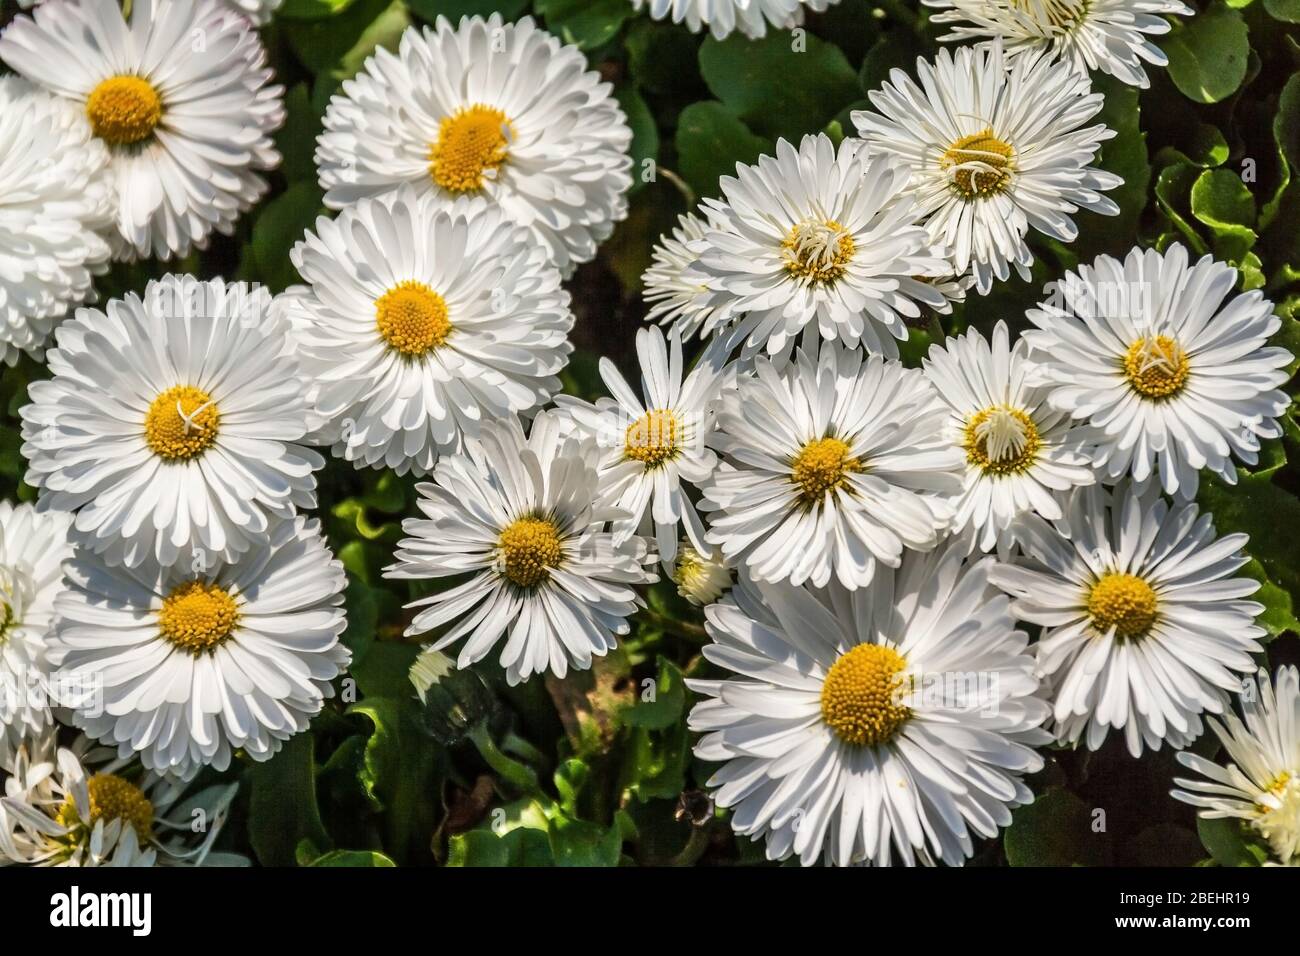 English daisies (bellis perennis) a common European species of daisy, family Asteraceae. Stock Photo